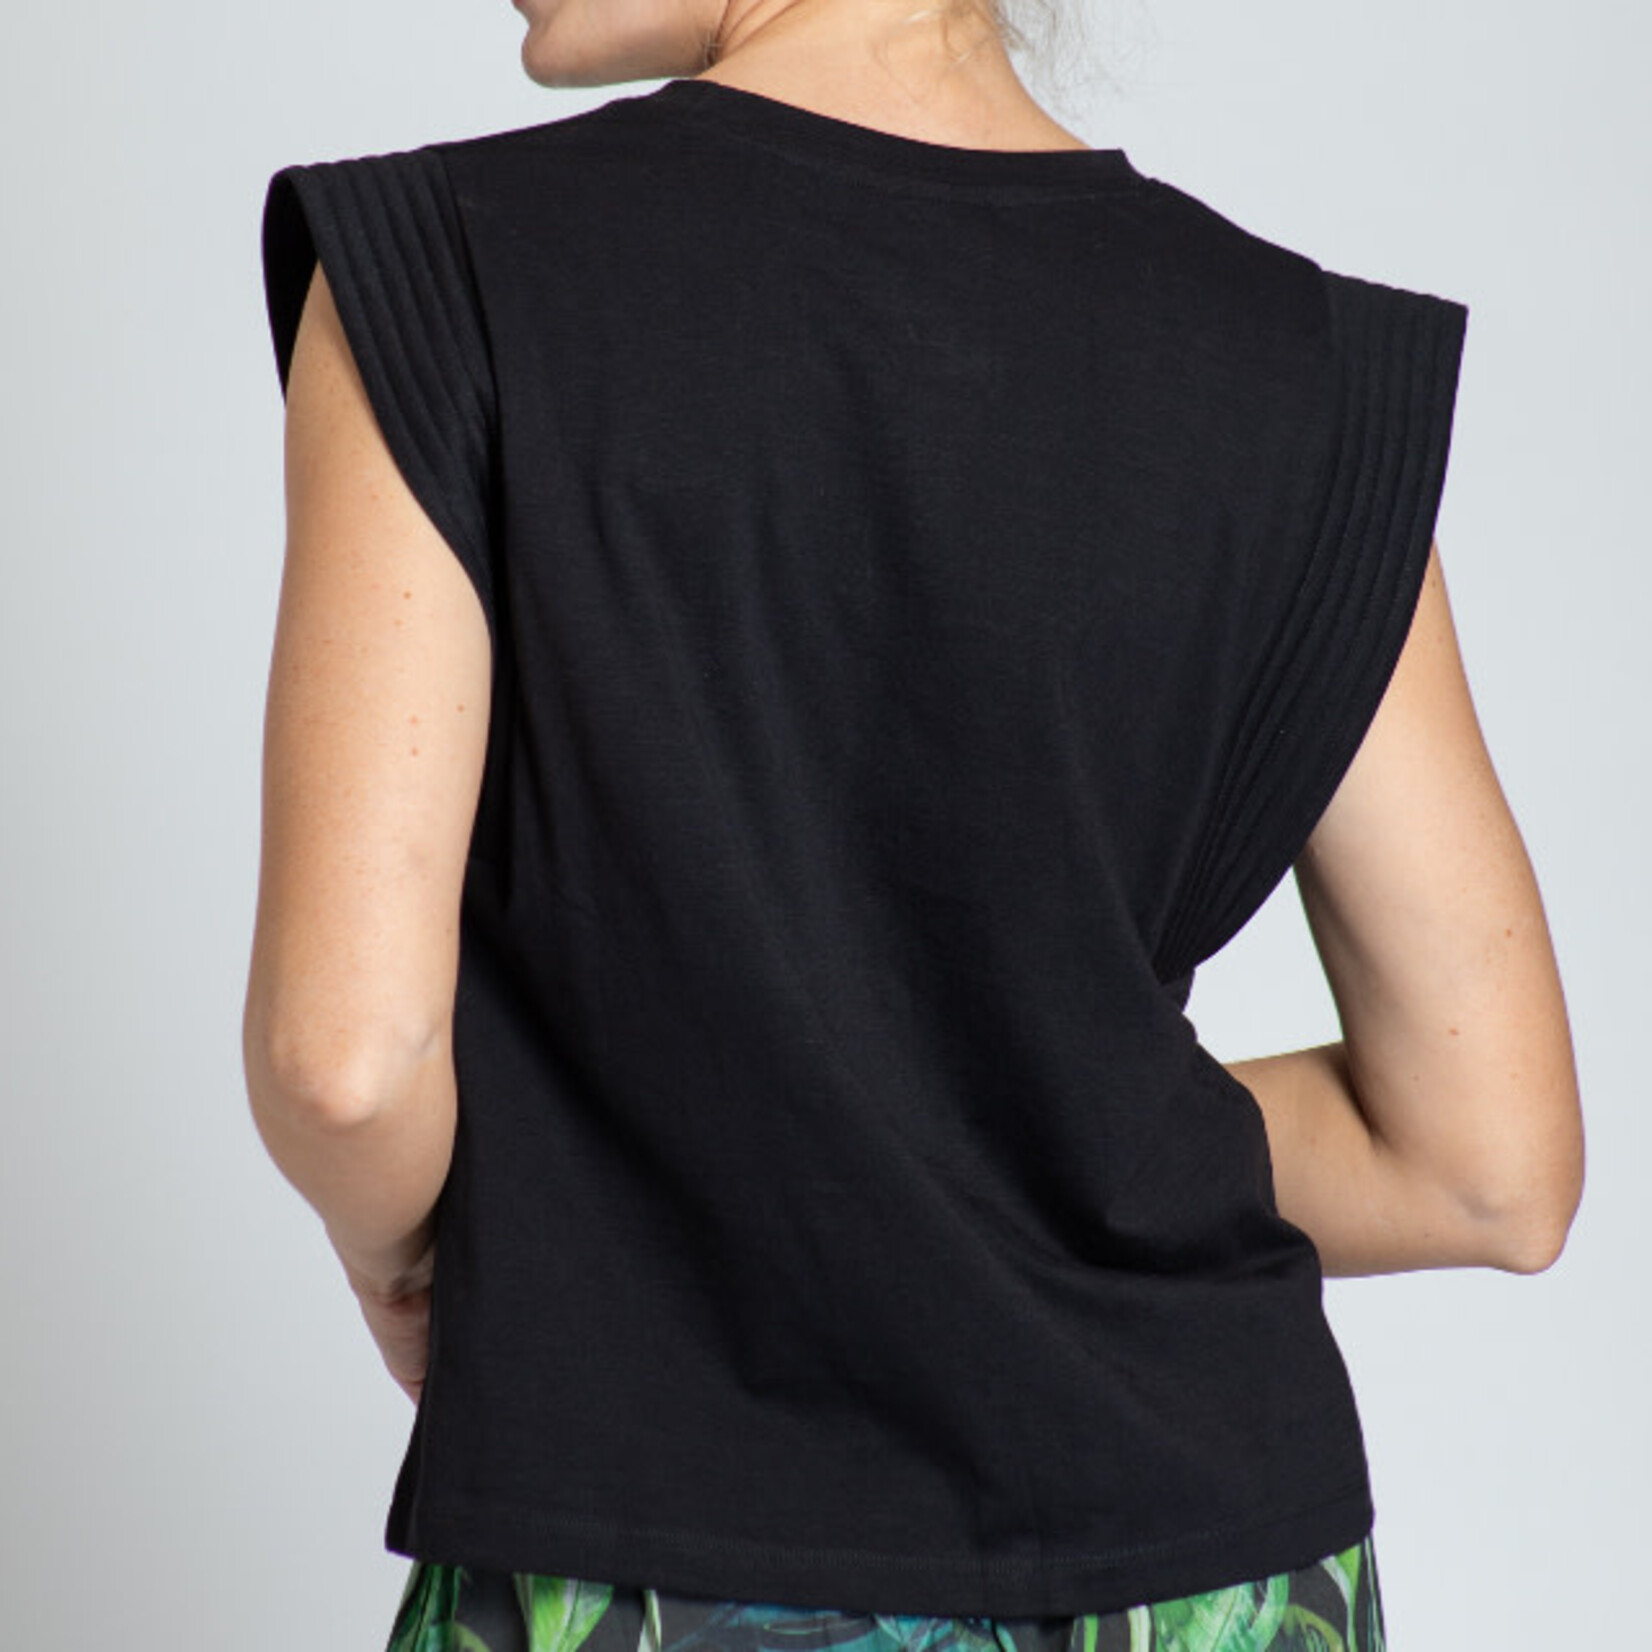 APNY Cotton Black Sleeveless Utility Shirt